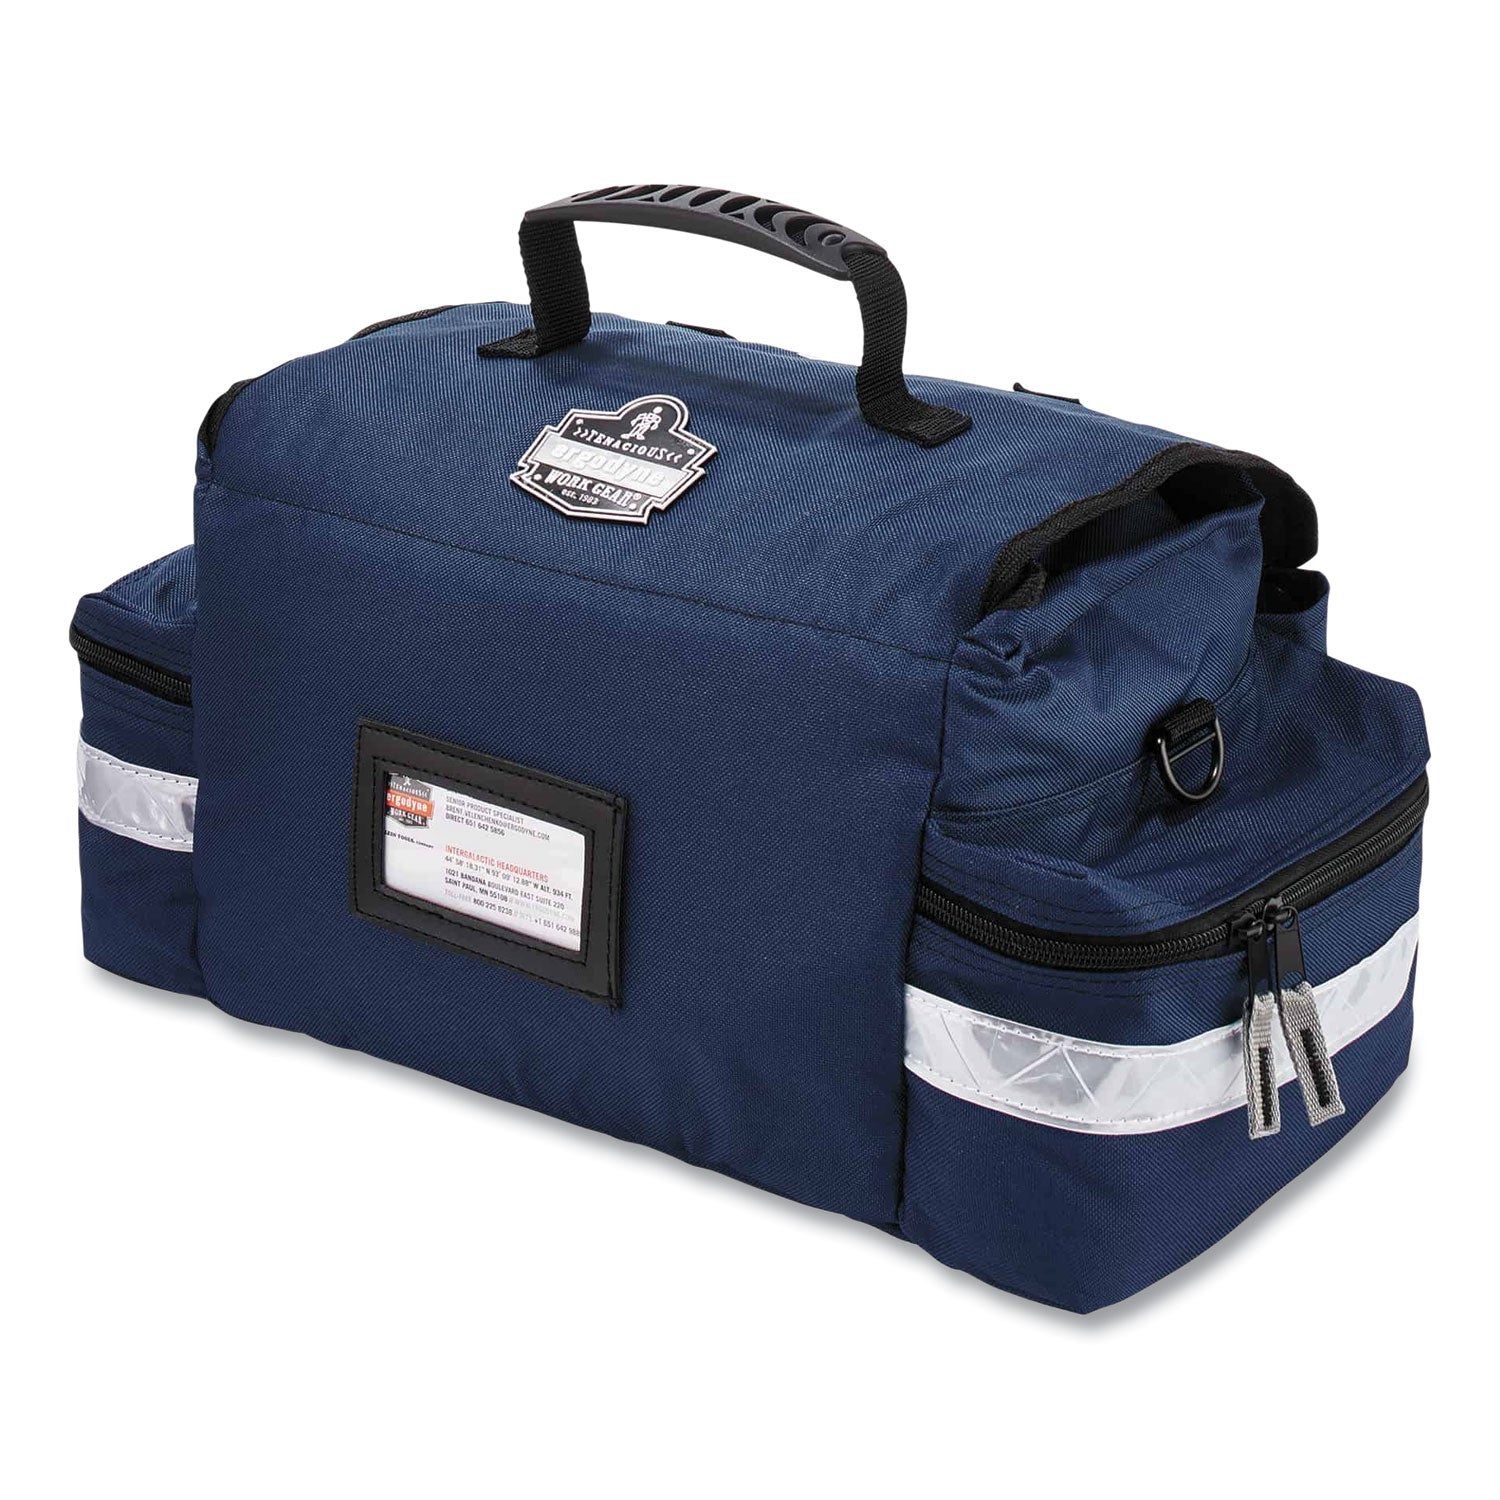 arsenal-5210-trauma-bag-small-10-x-165-x-7-blue-ships-in-1-3-business-days_ego13417 - 2